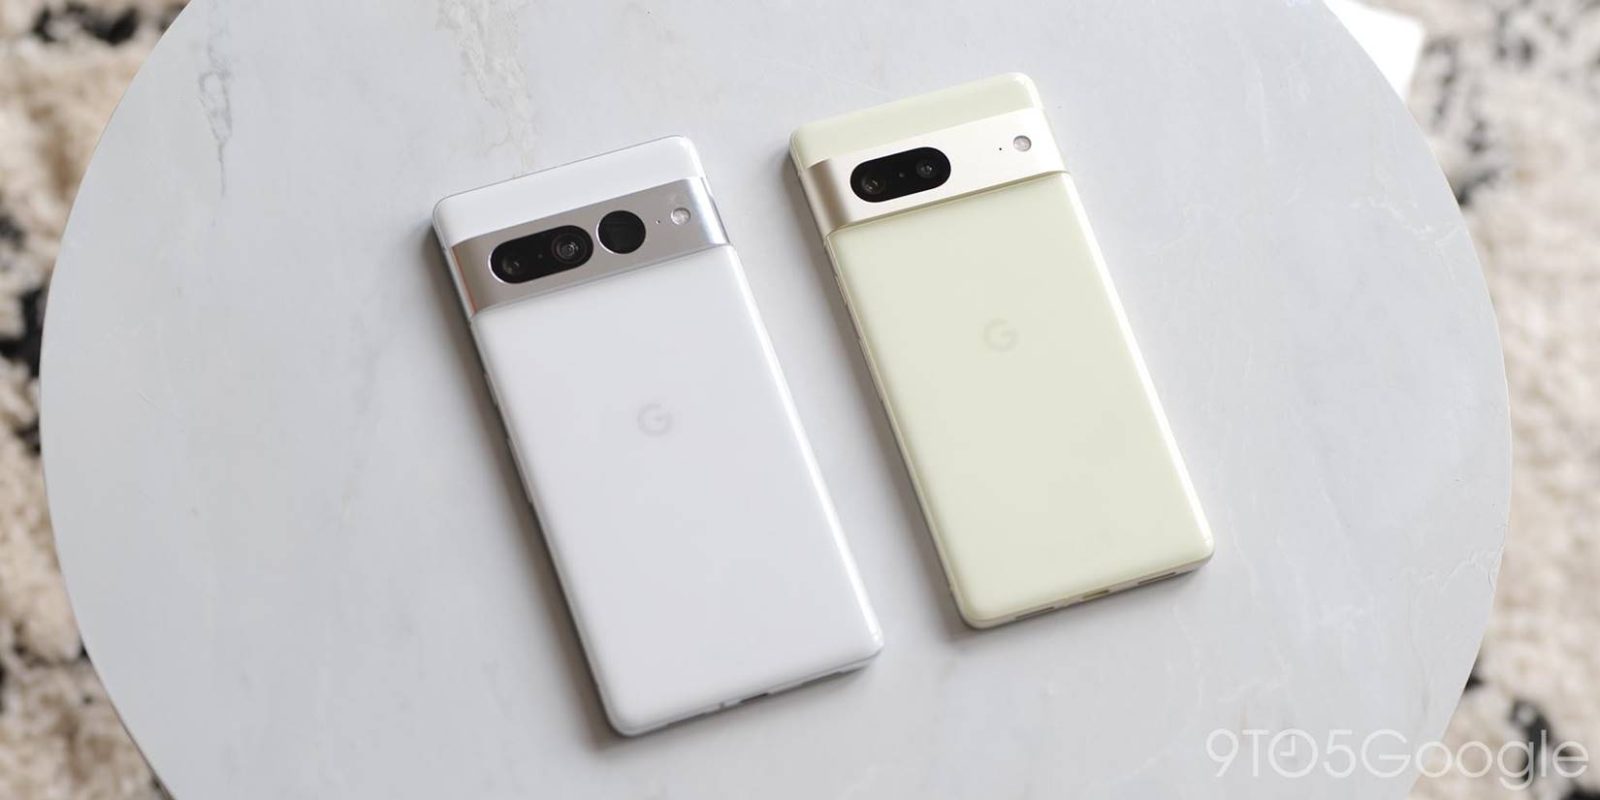 Google Pixel 7 Pro - 256GB - Black, White, Gray - Factory Unlocked - Very  Good